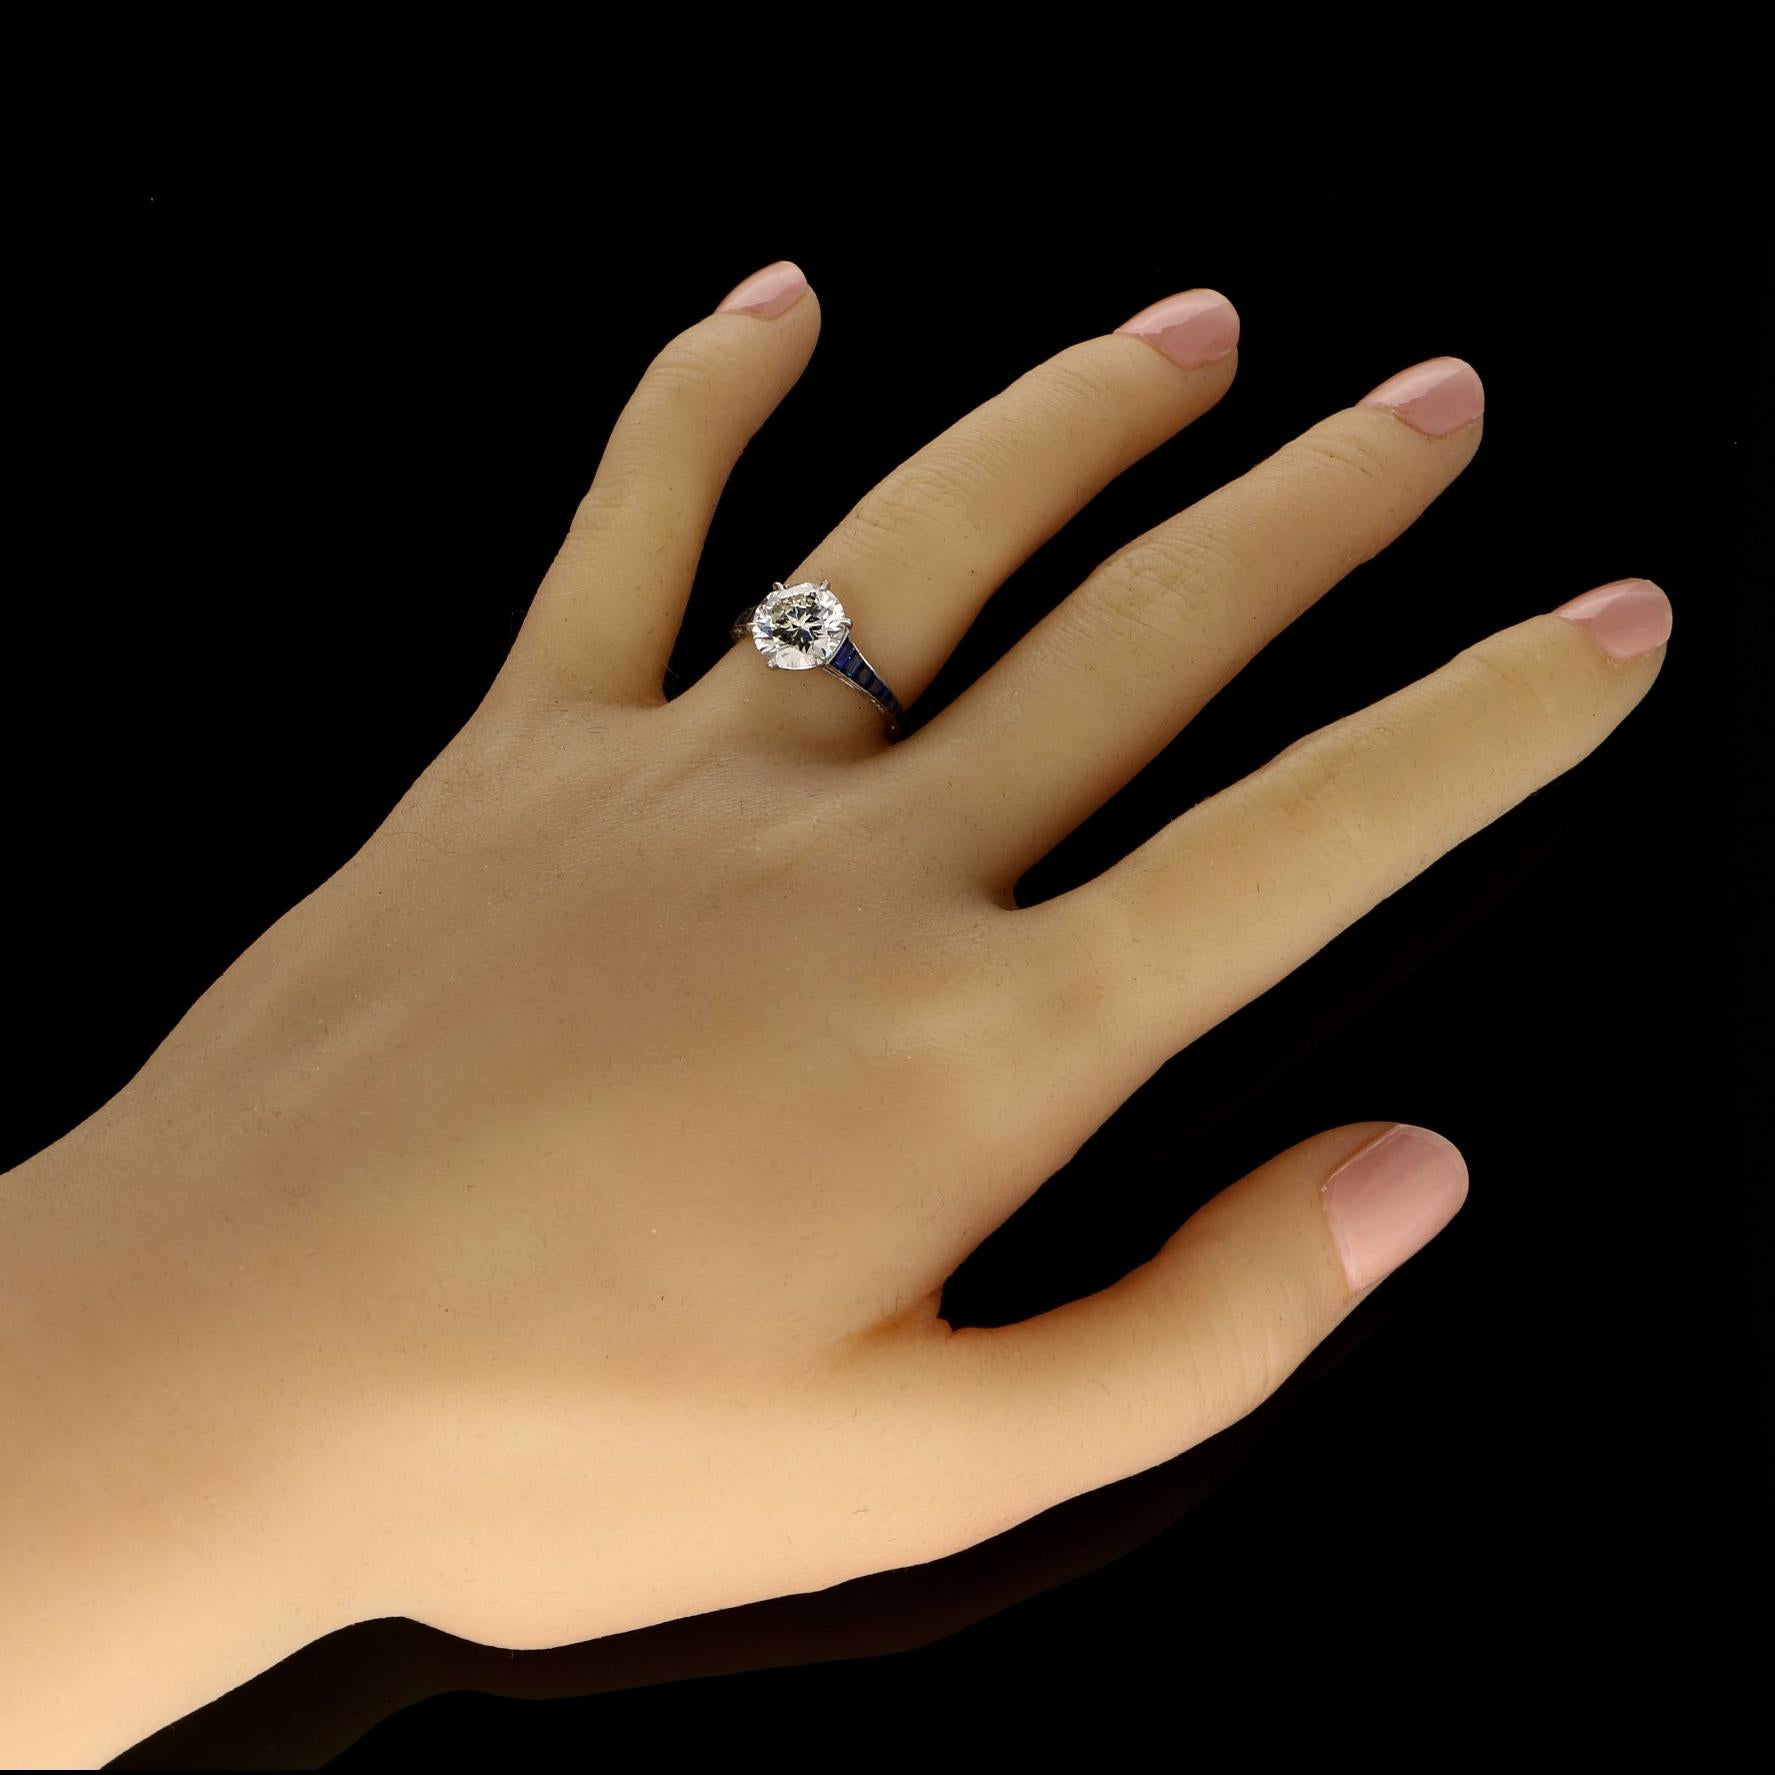 Women's or Men's Hancocks 2.04ct Carat Old-Cut Diamond Ring with Calibre-Cut Sapphire Shoulders